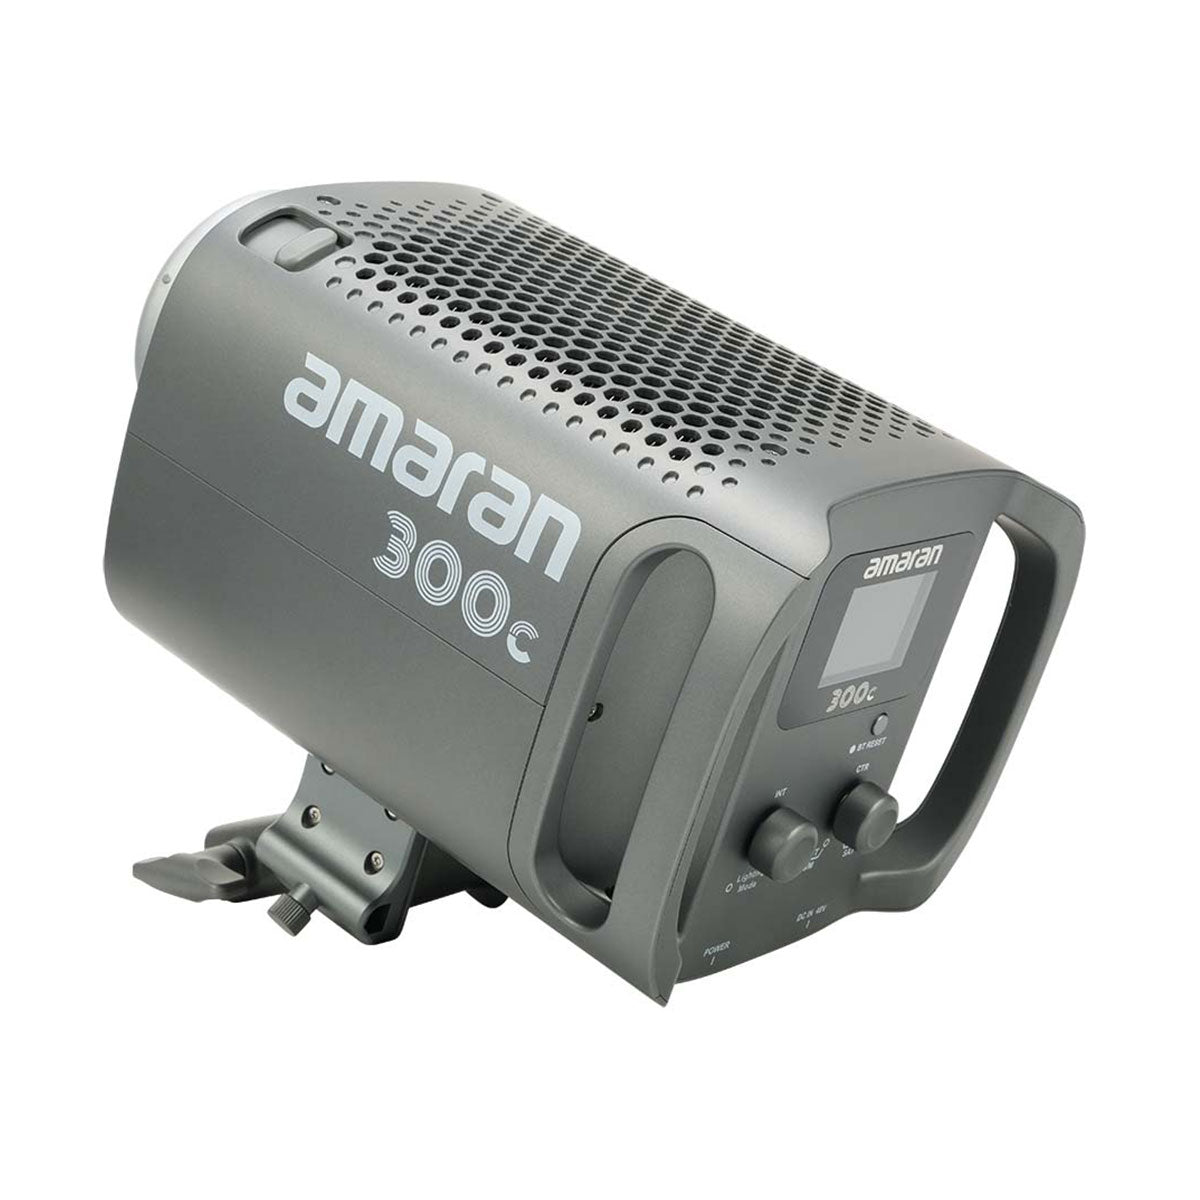 Amaran 300c RGB LED Light